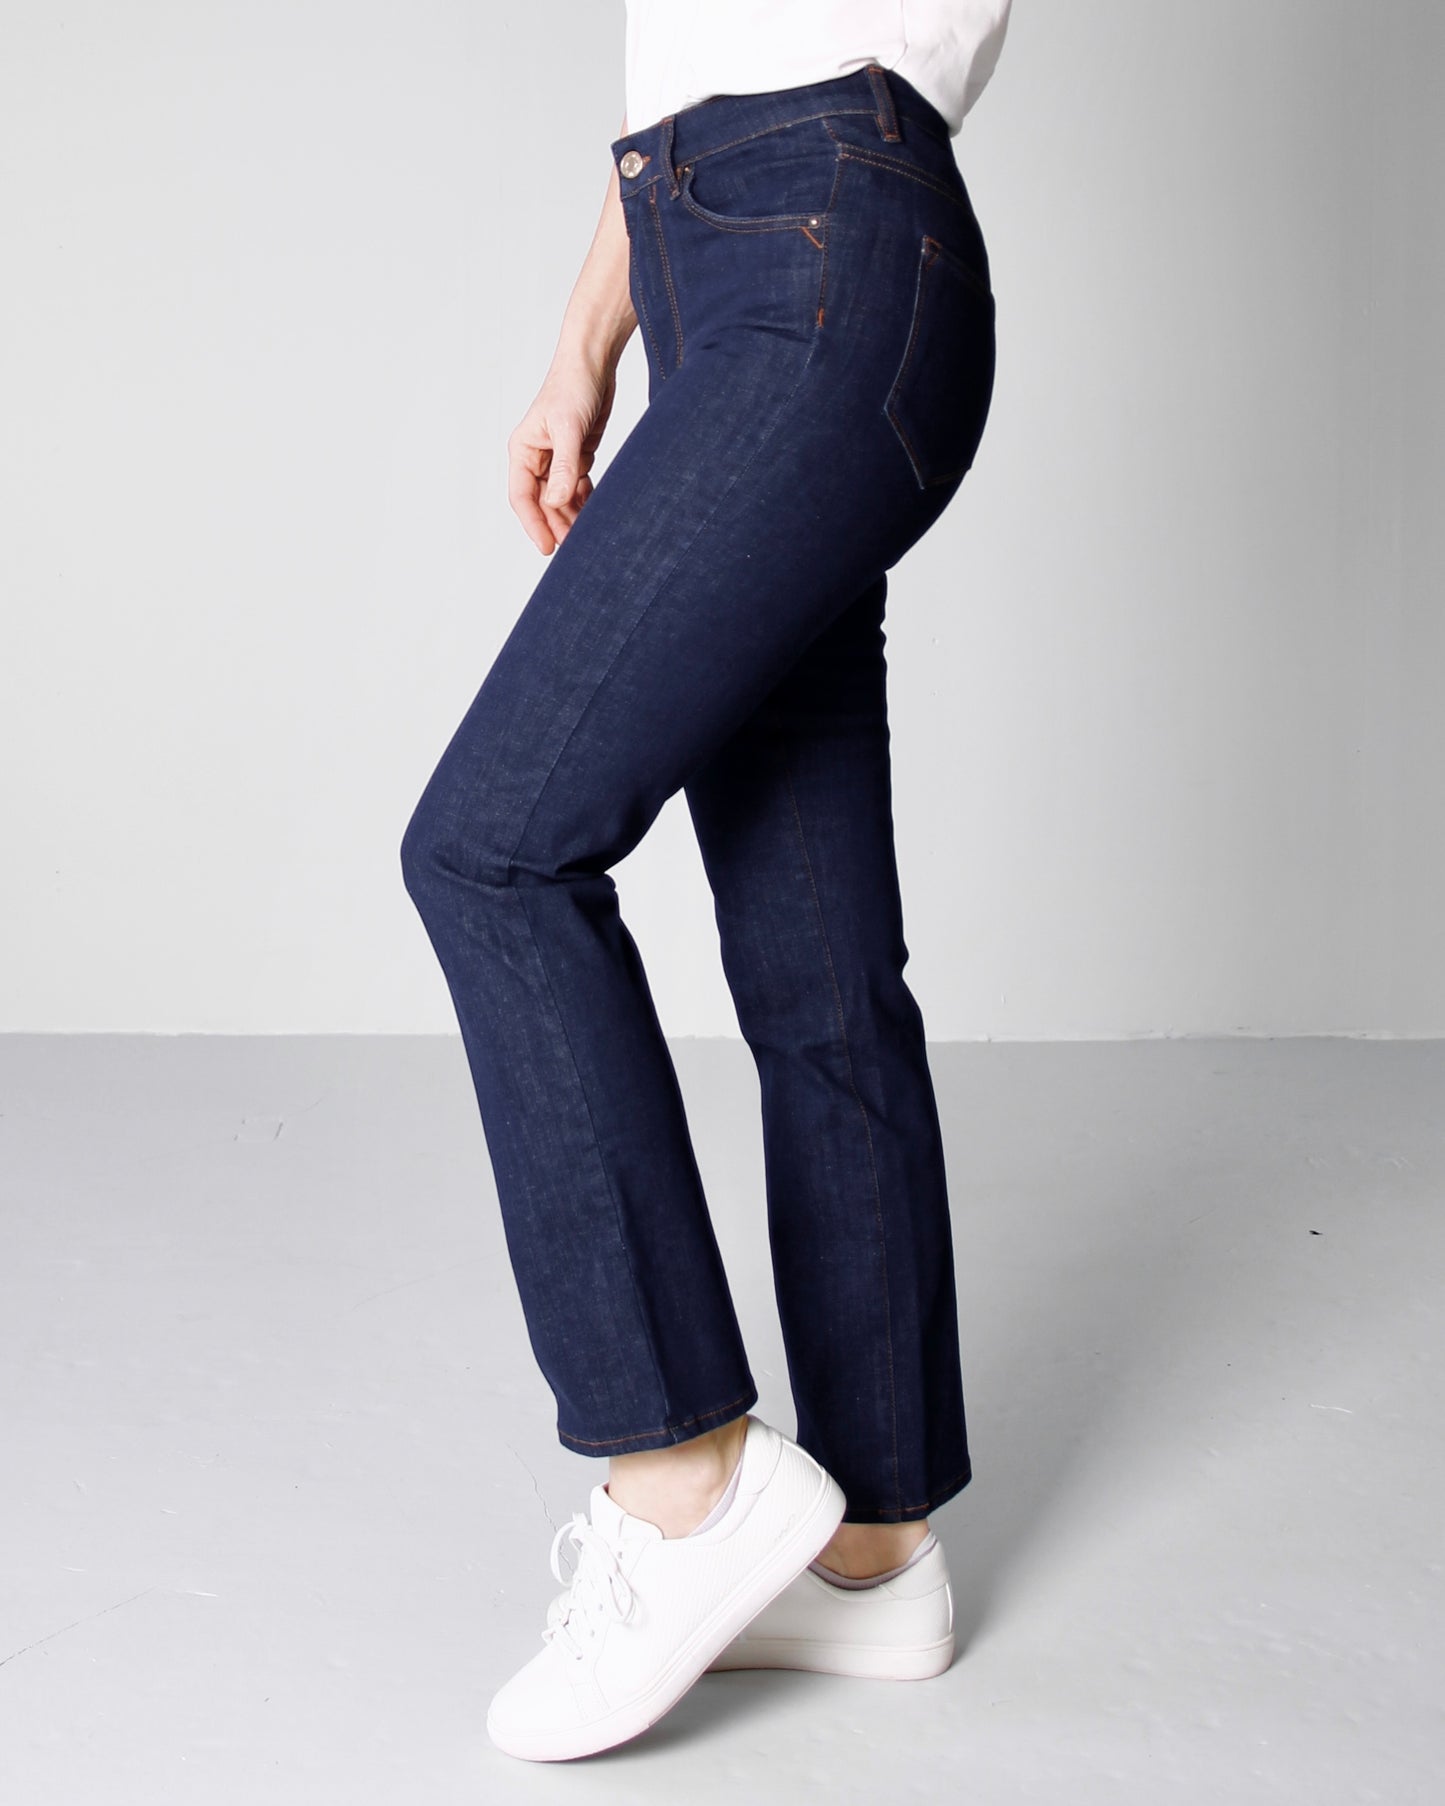 Violet Evening blue Jeans - Dame - Straight leg - High waist - Stretchy